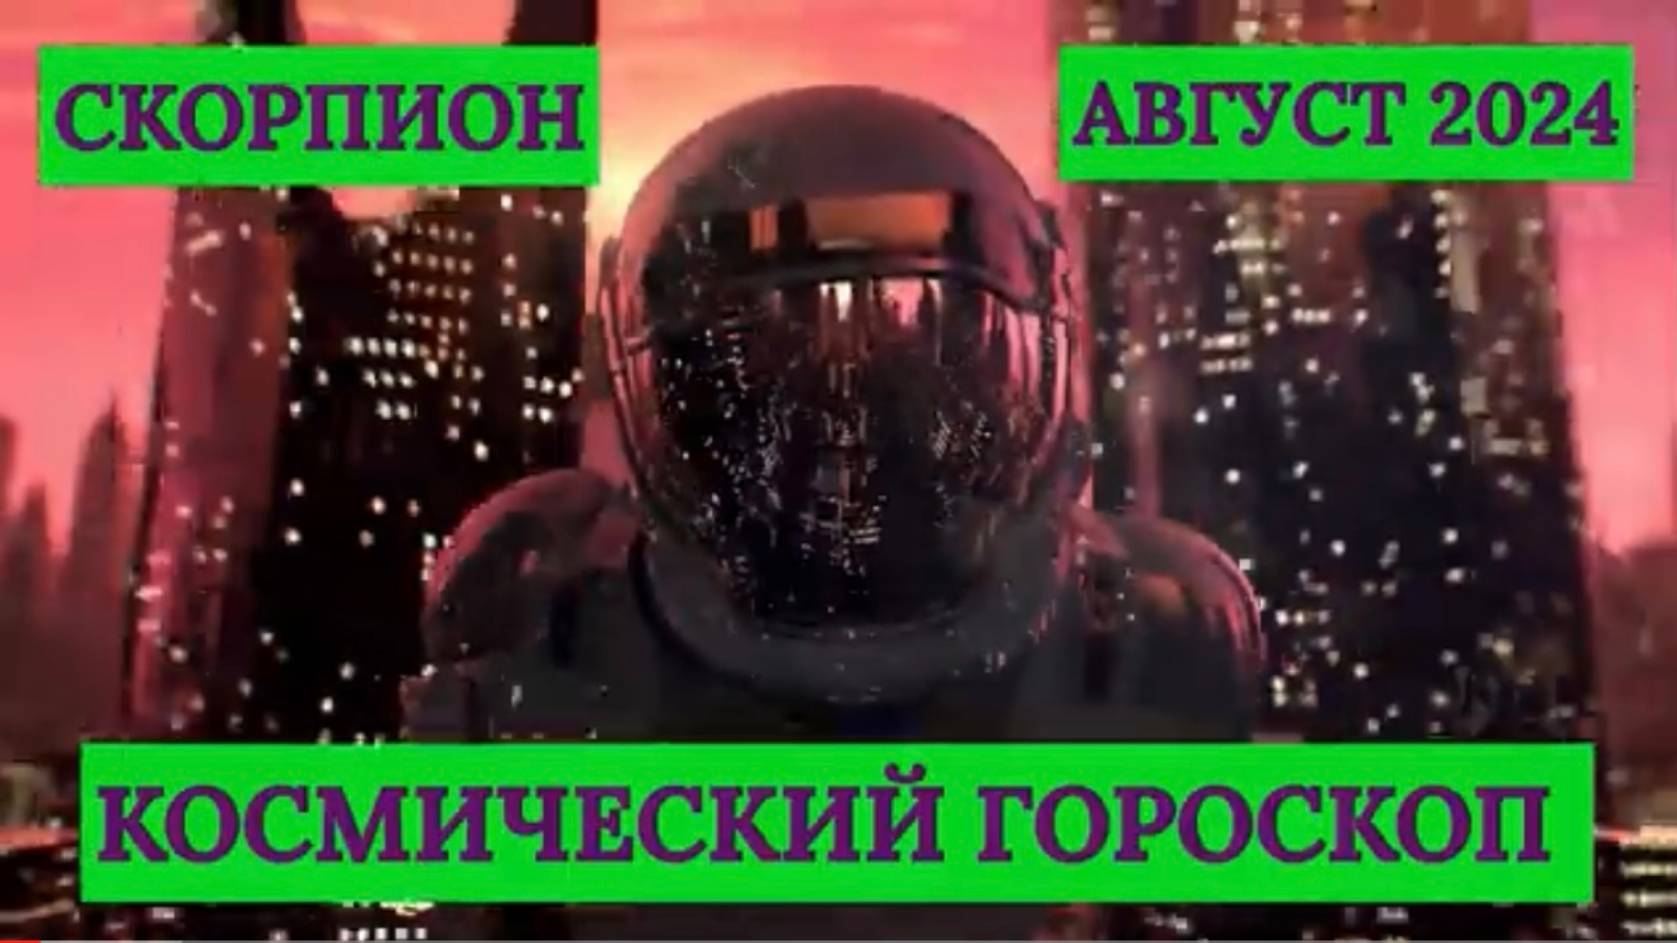 СКОРПИОН - "КОСМИЧЕСКИЙ ГОРОСКОП на АВГУСТ-2024"